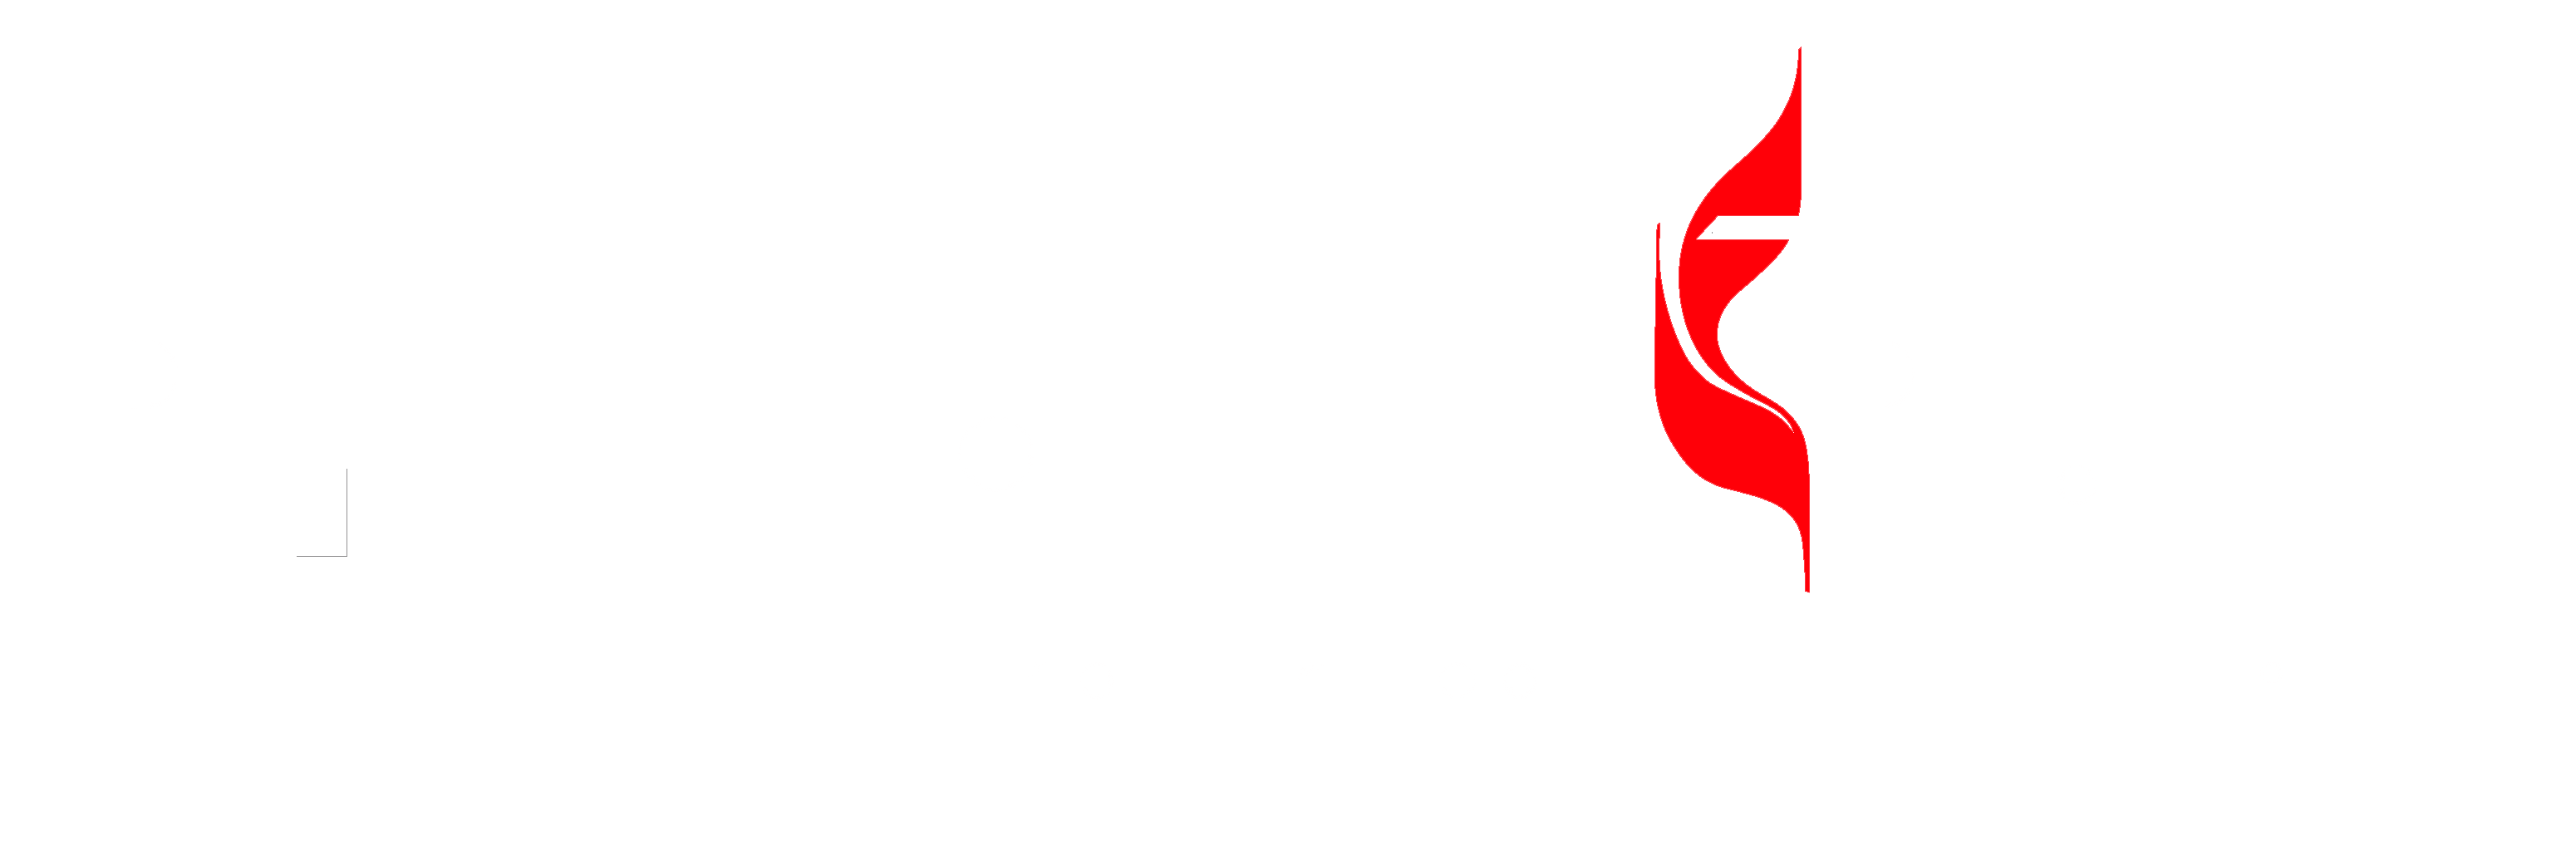 Plymouth Park United Methodist Church Logo